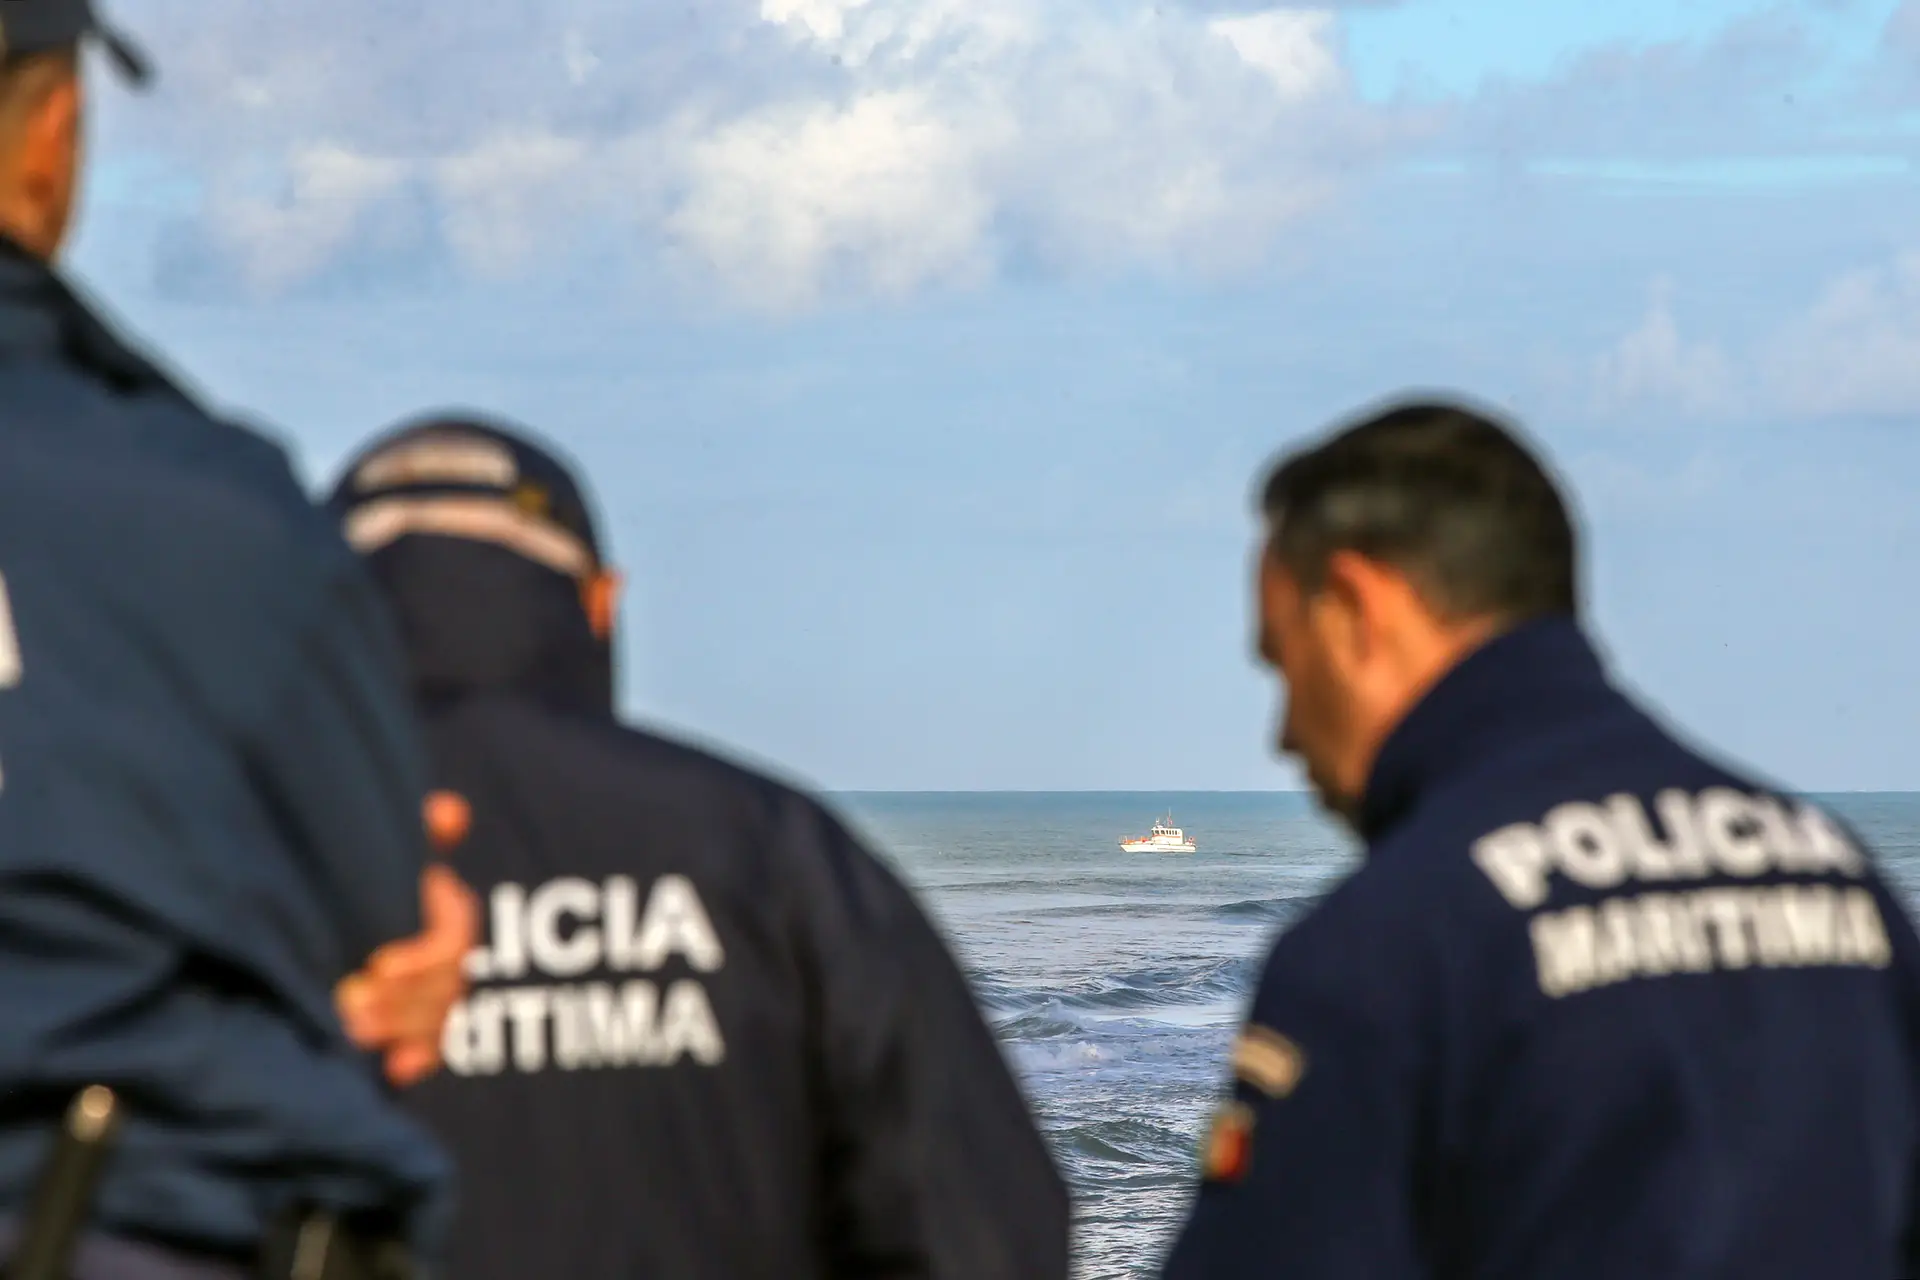 Retomadas buscas por norte-americano desaparecido no mar no Algarve